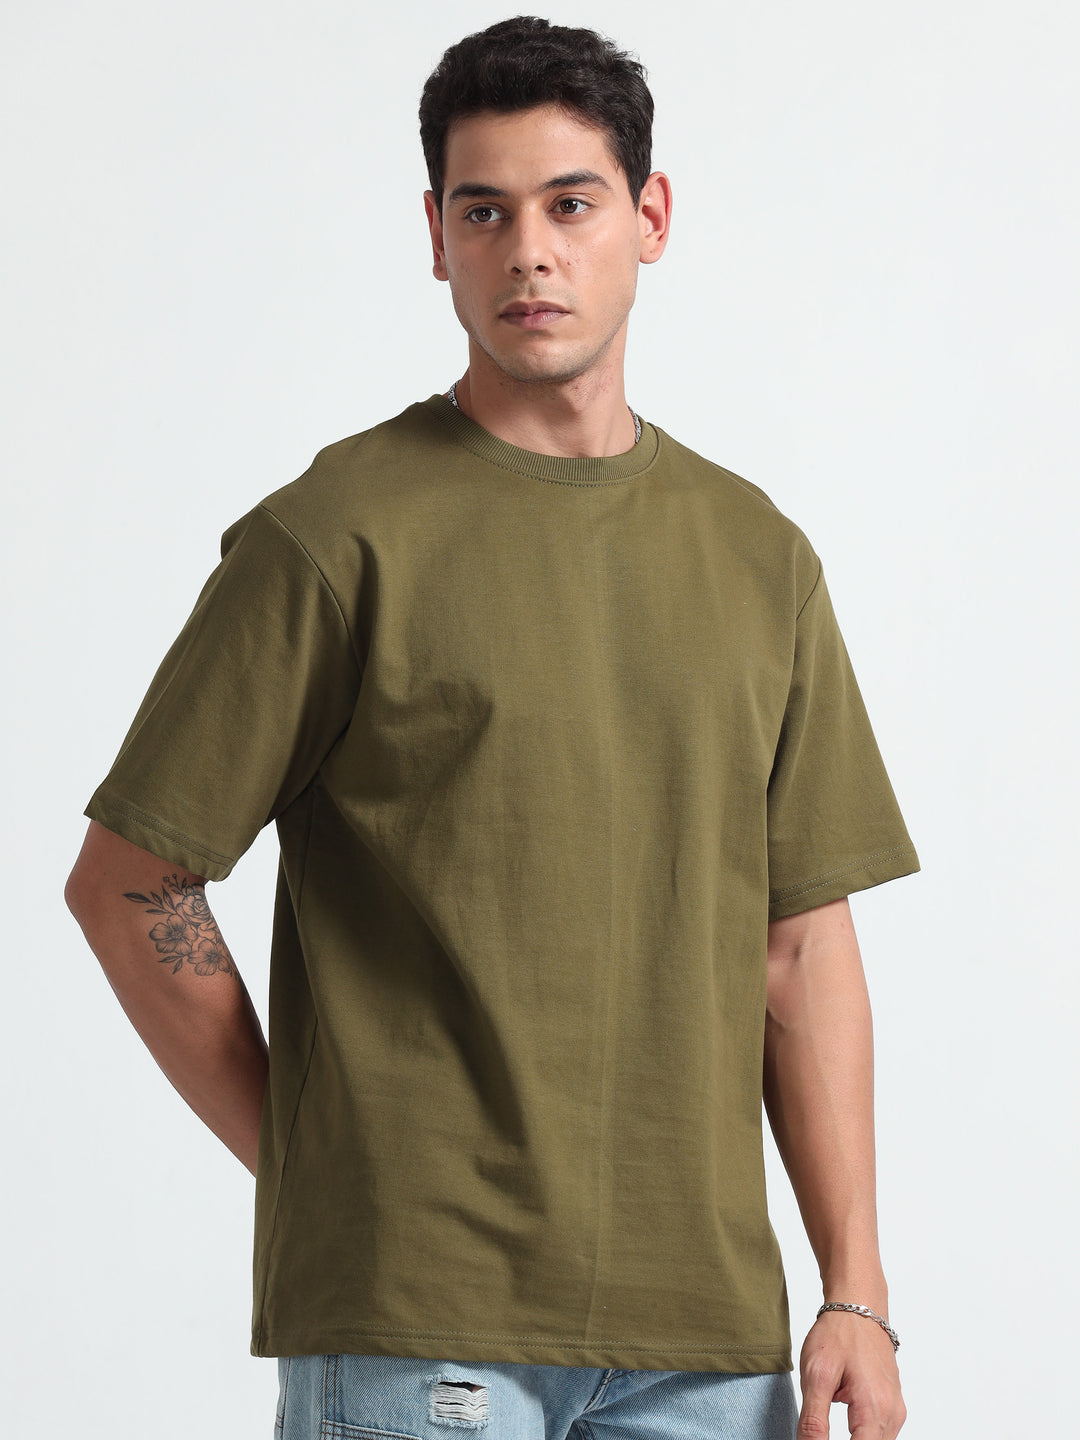 240GSM Unisex Olive Green Cotton Oversized Tshirt